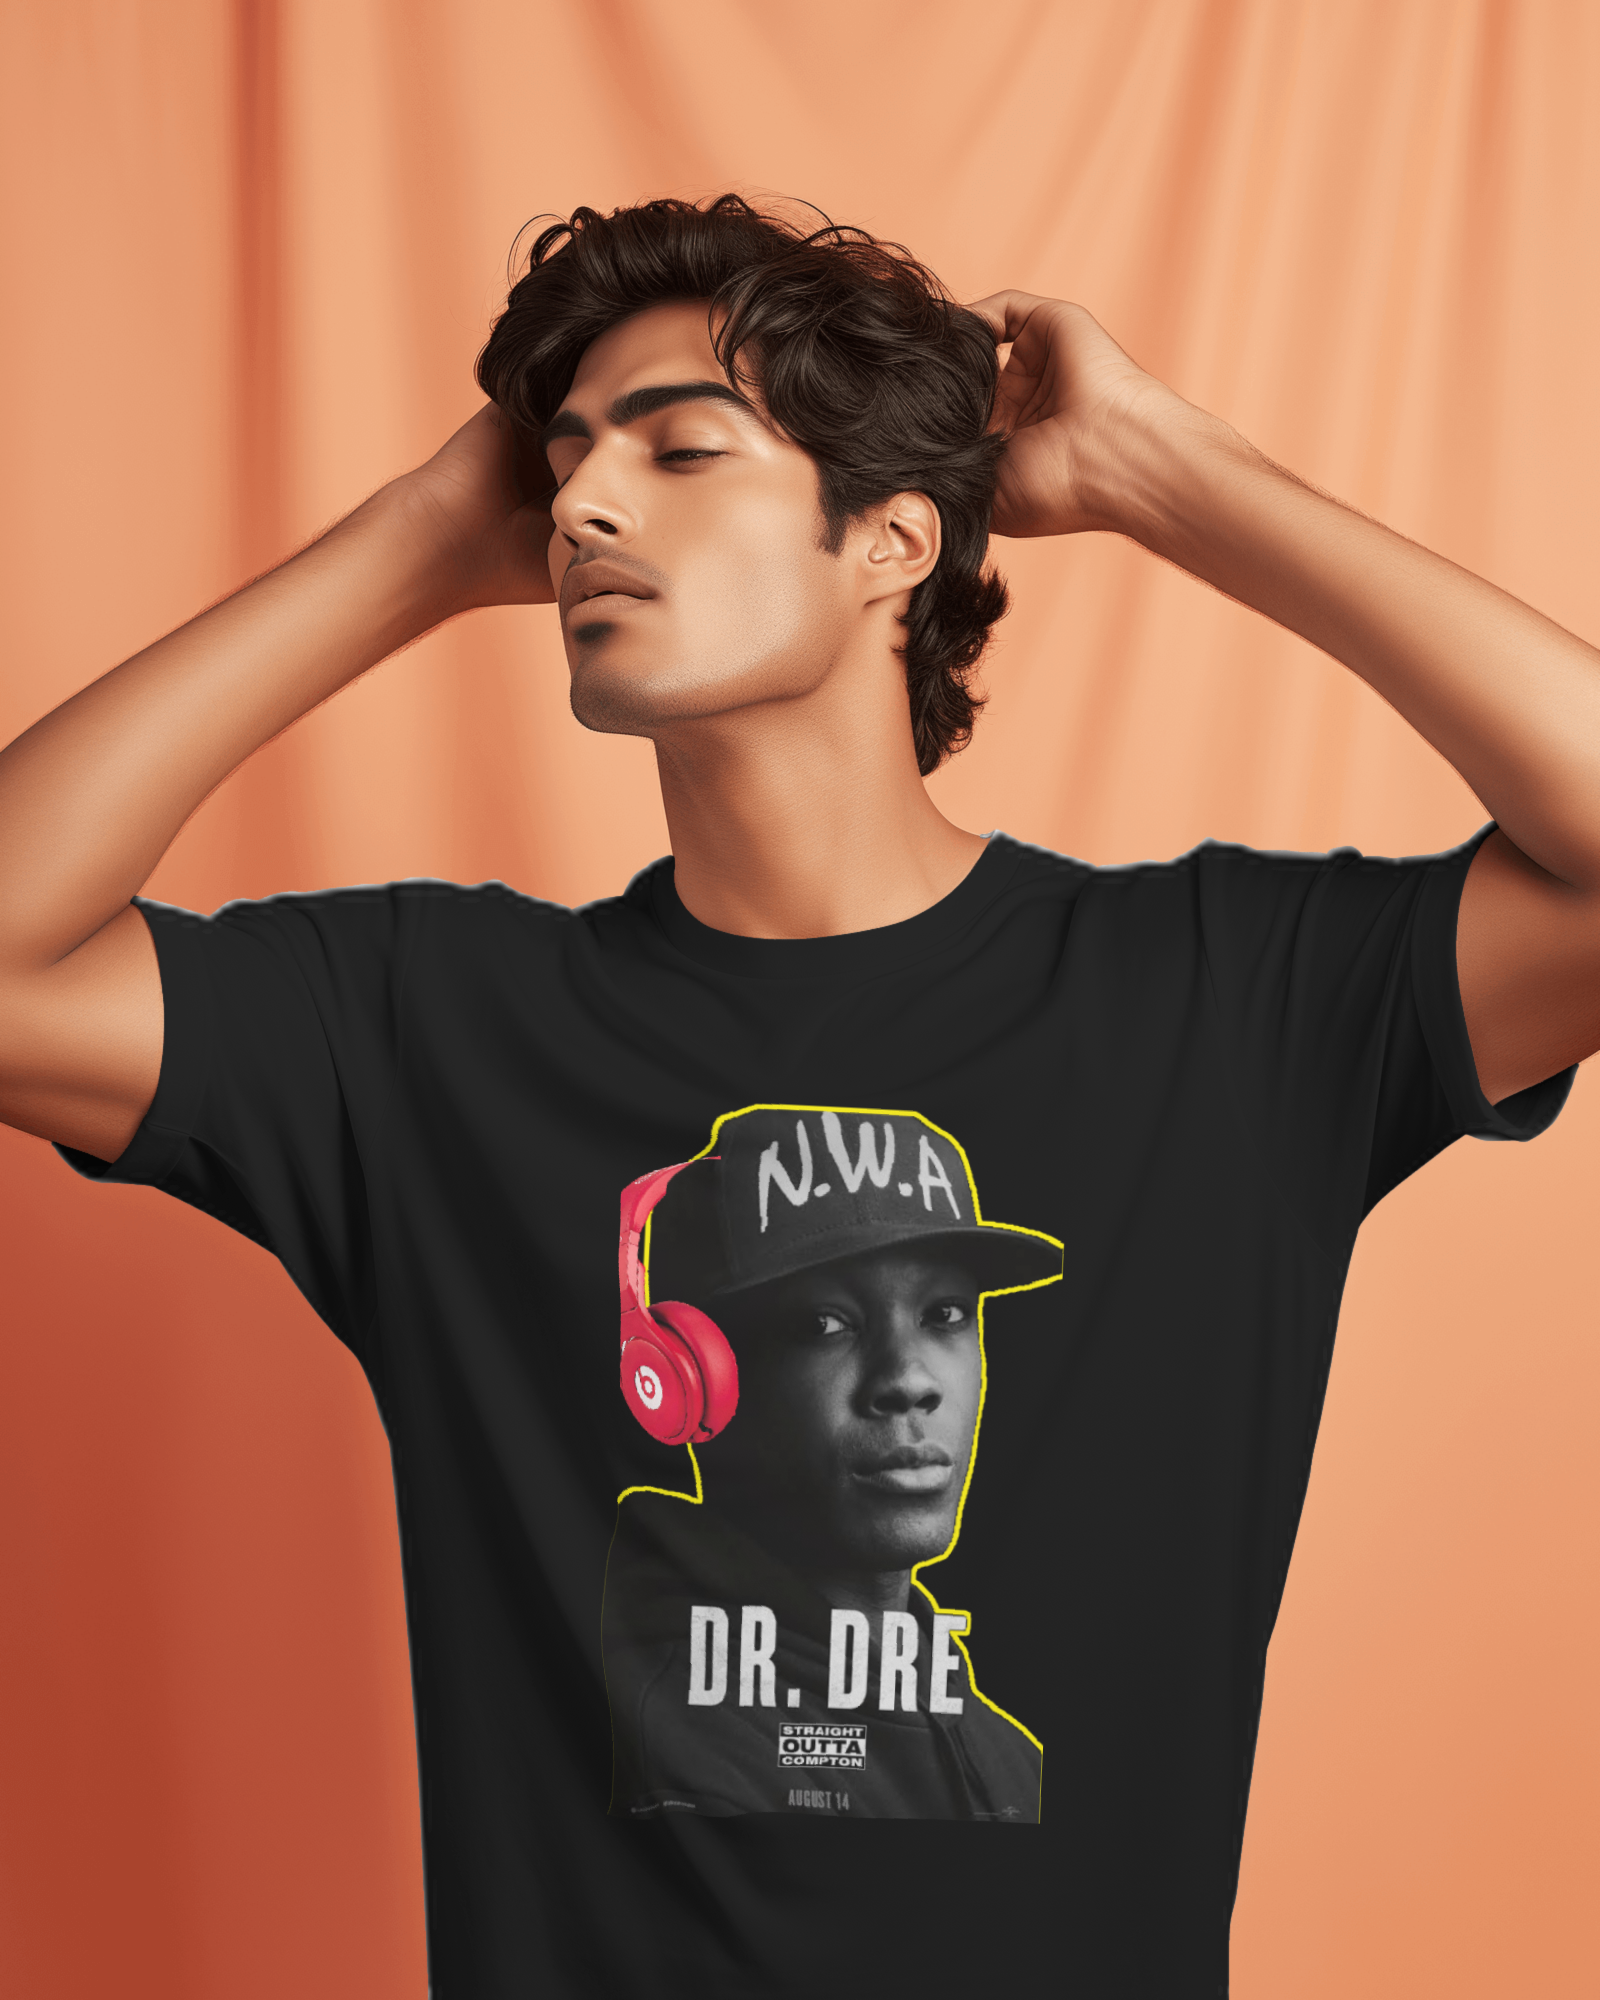 #drdre Printed Tshirt for men